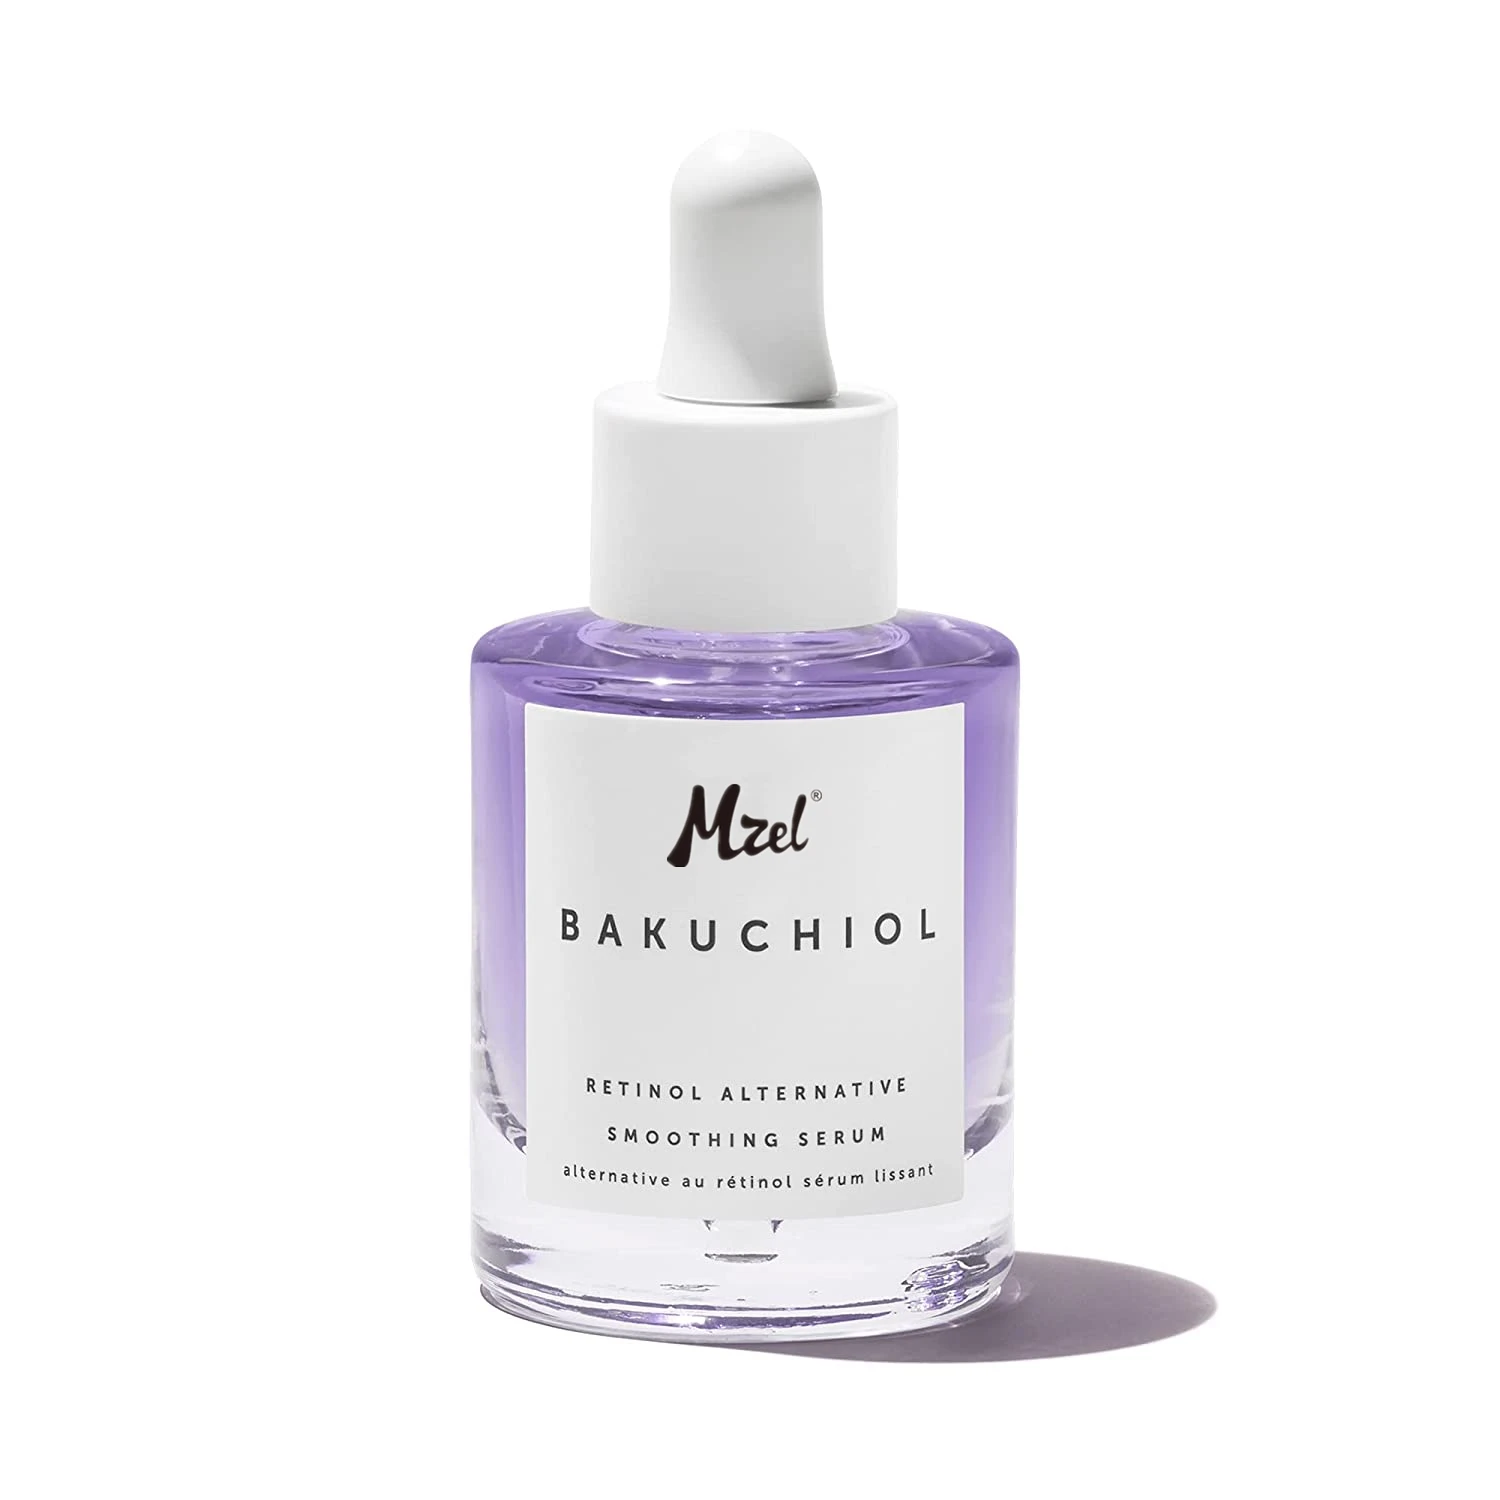 

Private Label Anti aging Bakuchiol Retinol Alternative Smoothing Serum, Moisturizing, Anti-wrinkle Face Serum